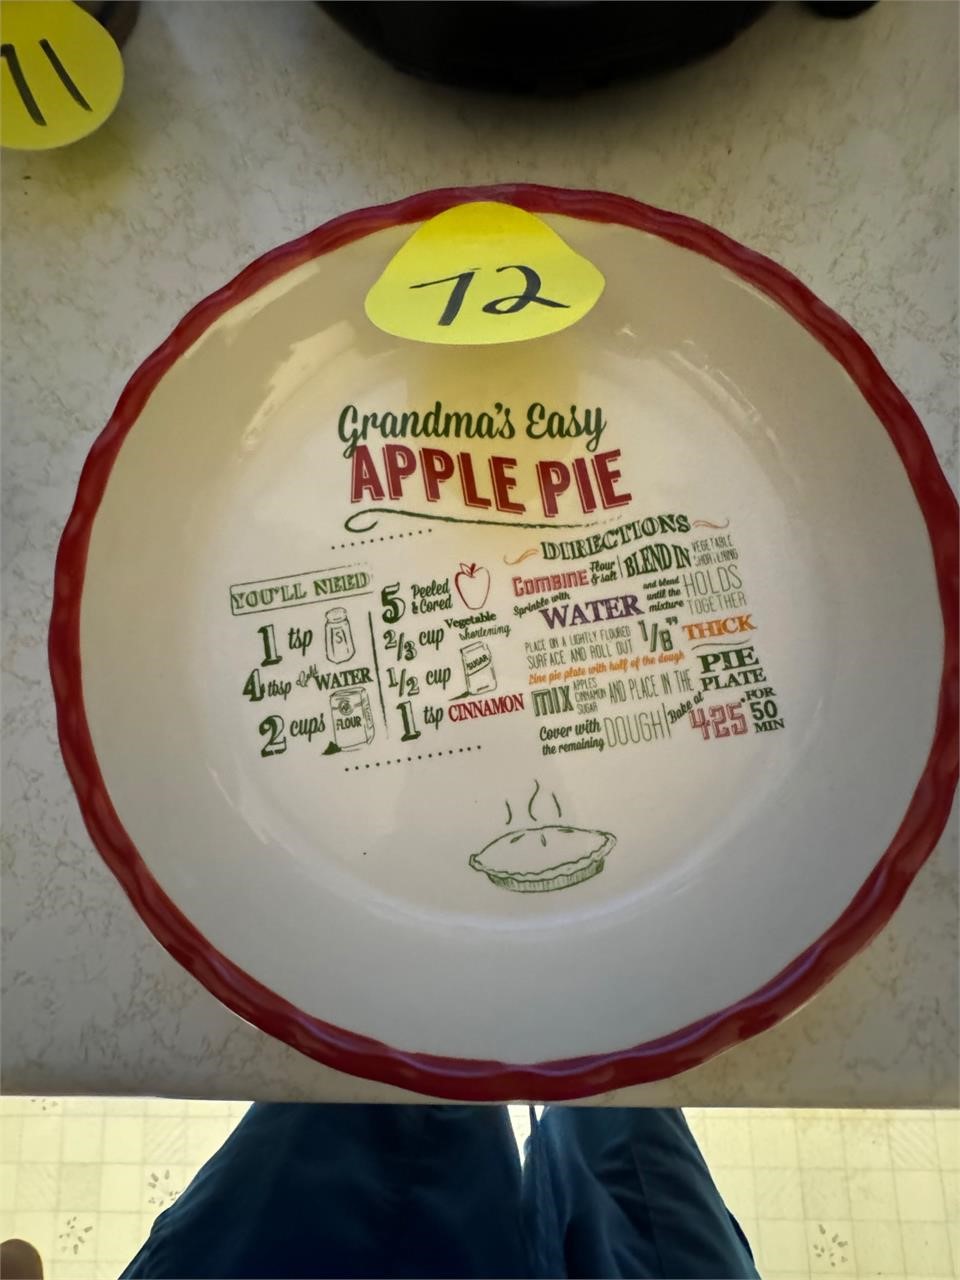 Grandma’s easy apple pie recipe on ceramic pan